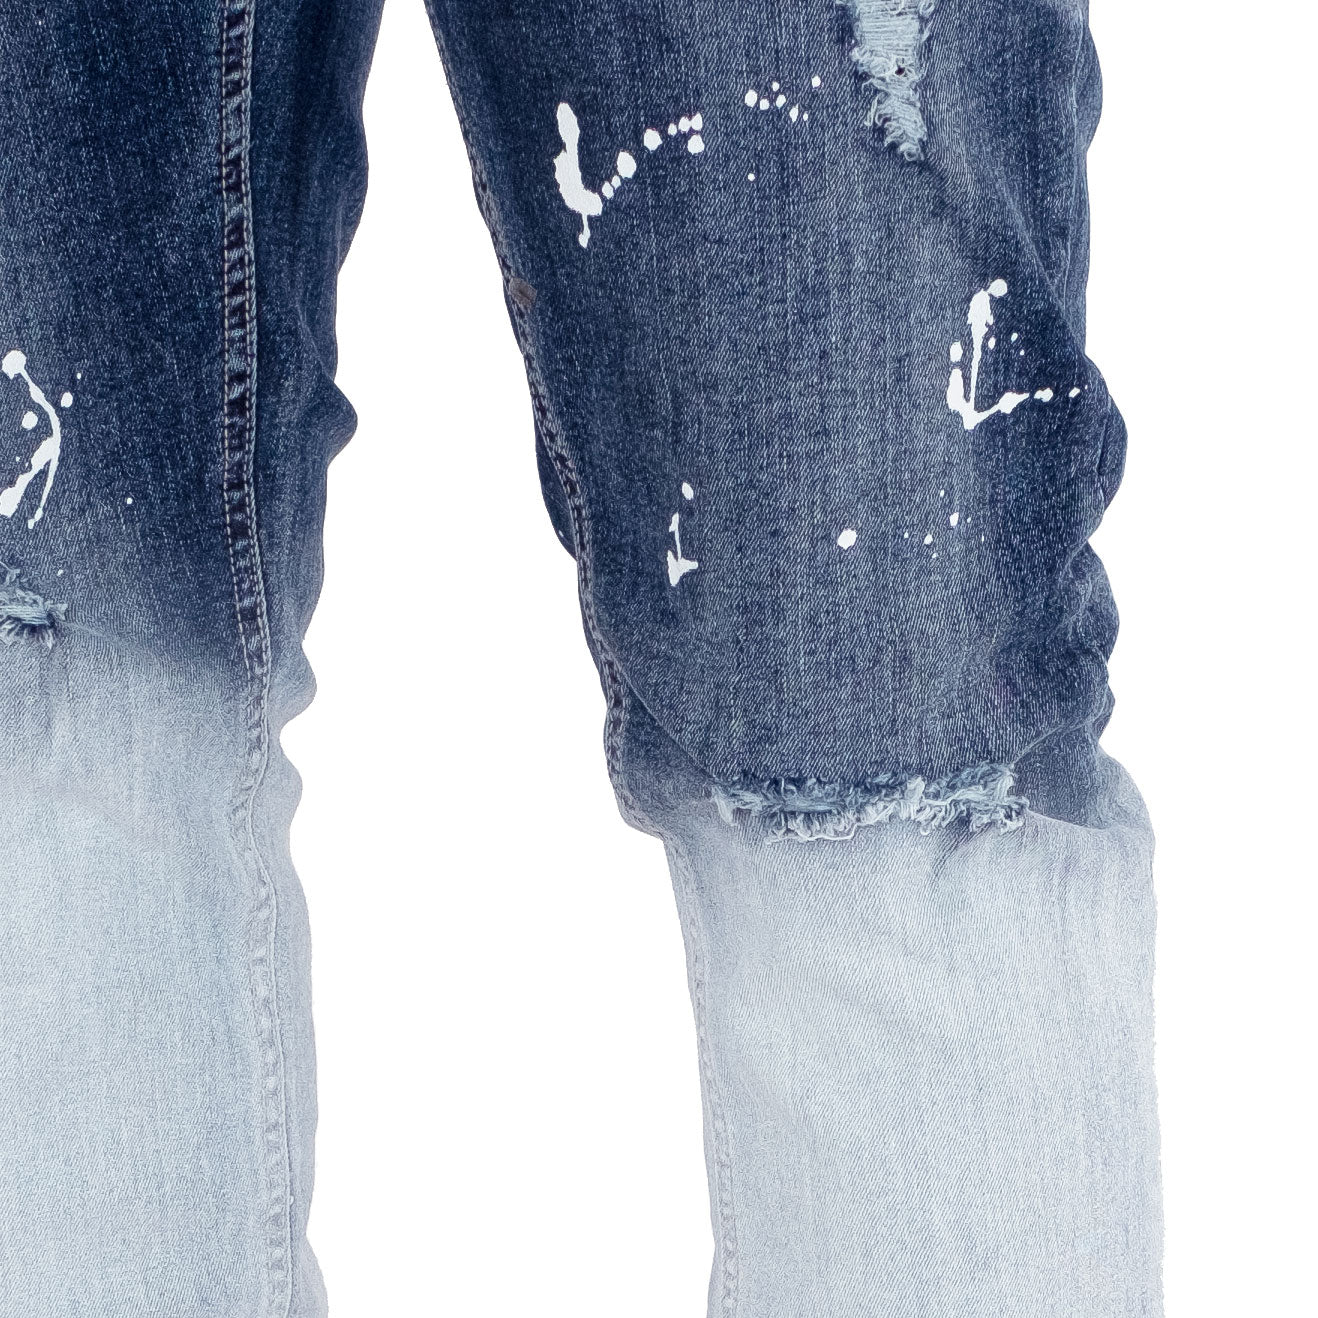 KEDZIE | Men's Slim Fit Rip & Repair with Splatter Paint in Light Stonewash Blue